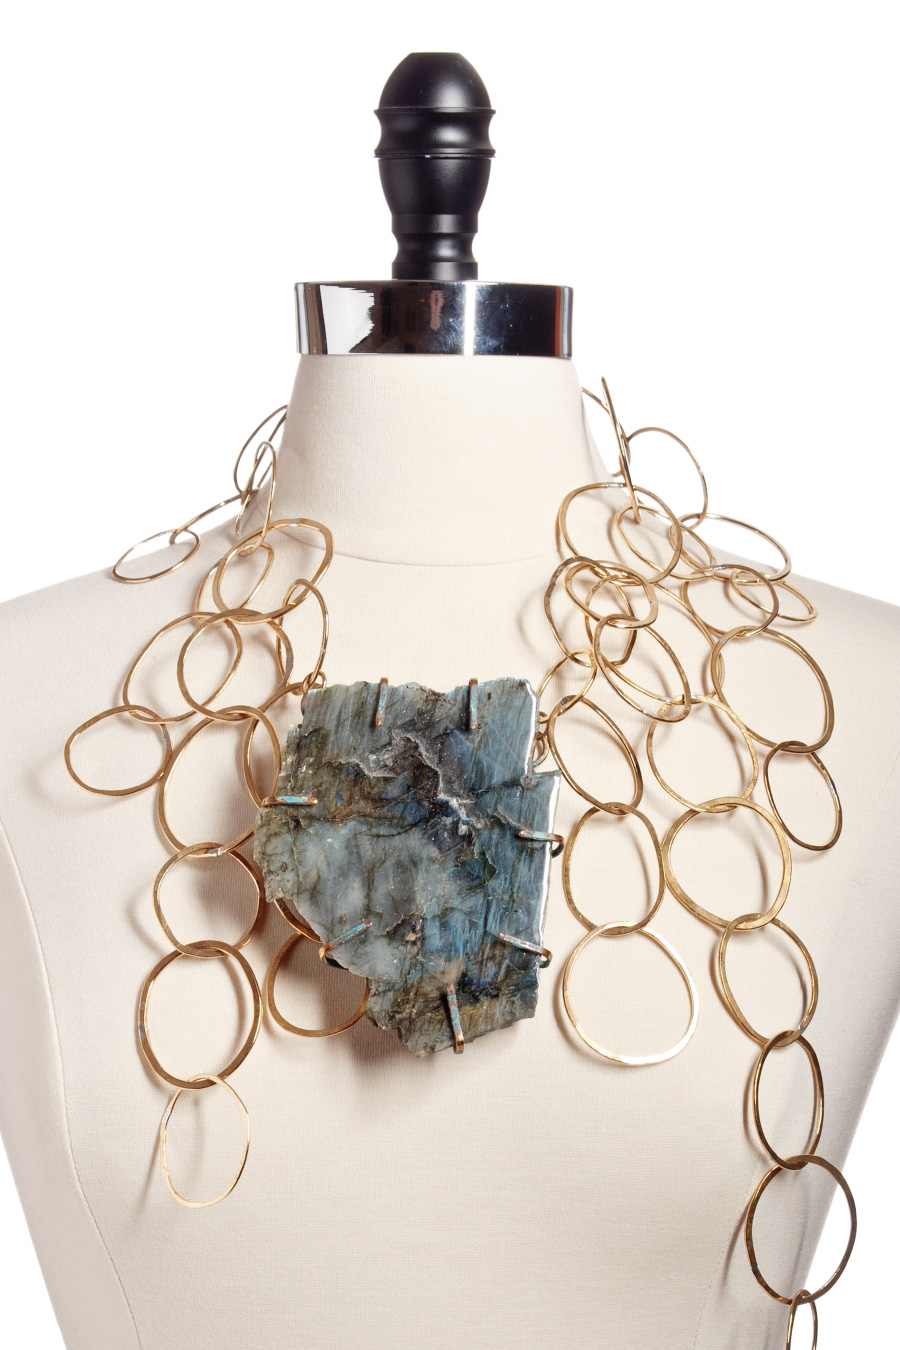 jewelry Jewelrydesign sculptural danamarieburmeister SCAD Necklace minerals rocks metal